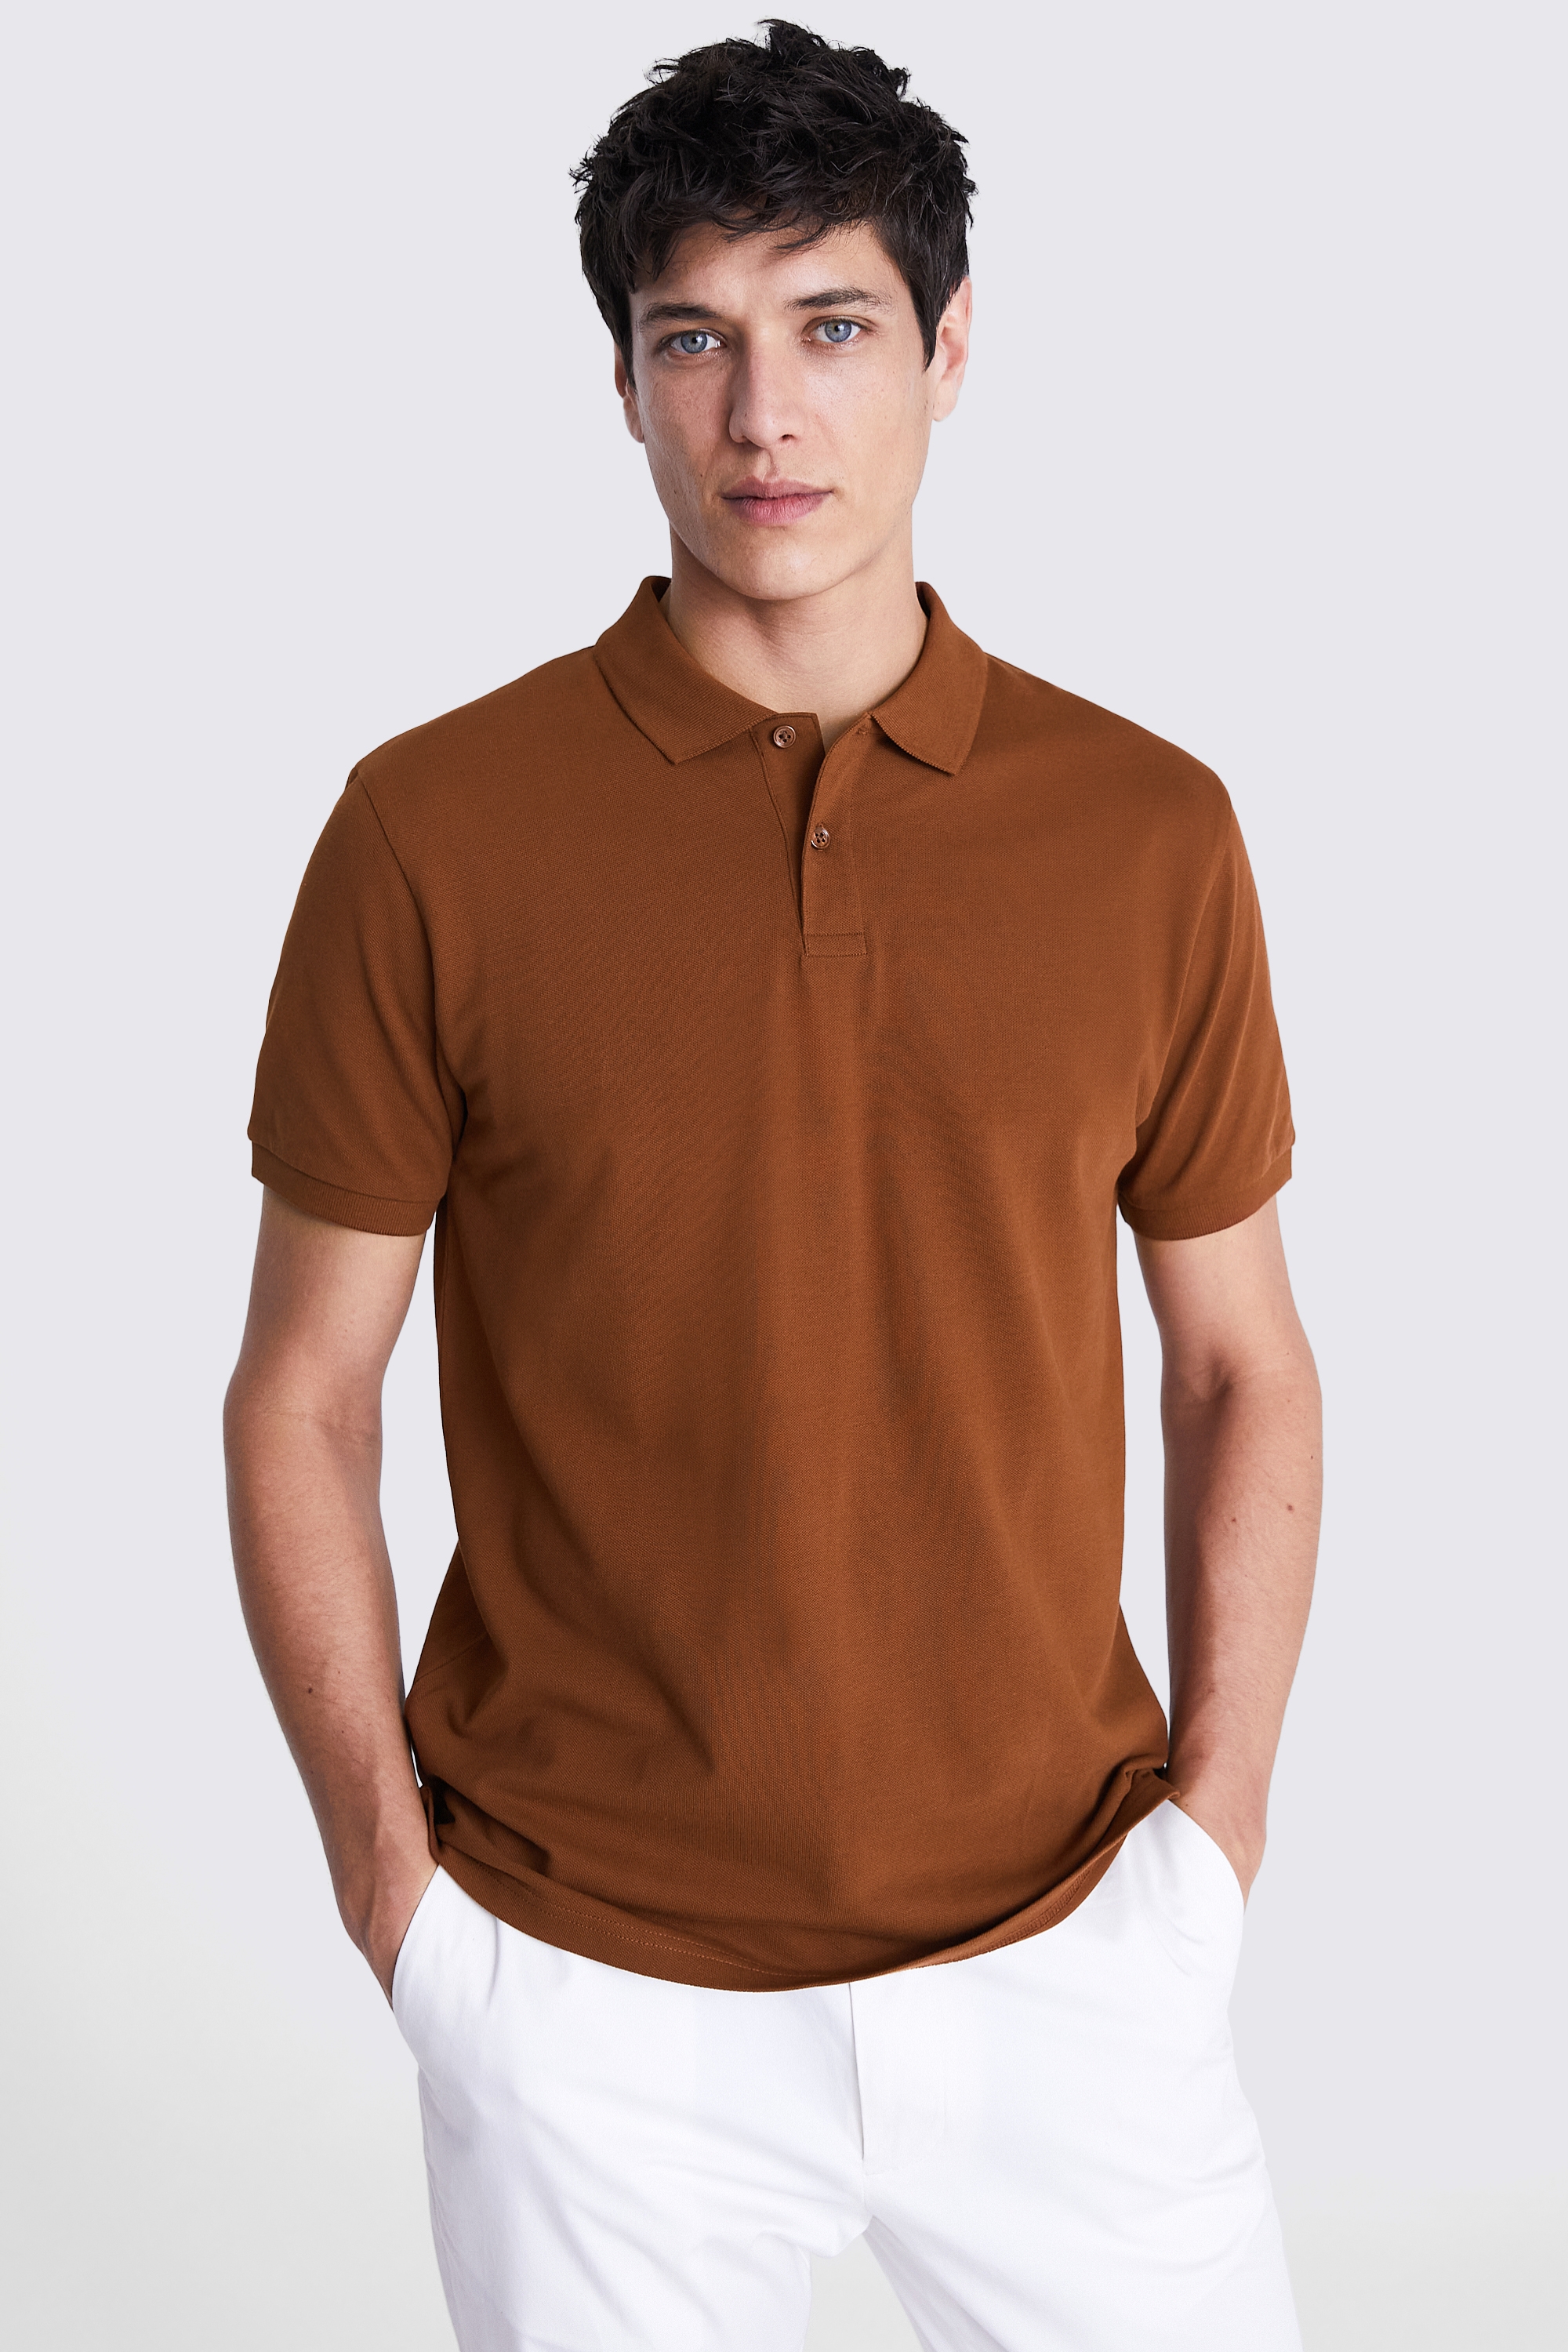 Rust Piqué Polo Shirt | Buy Online at Moss